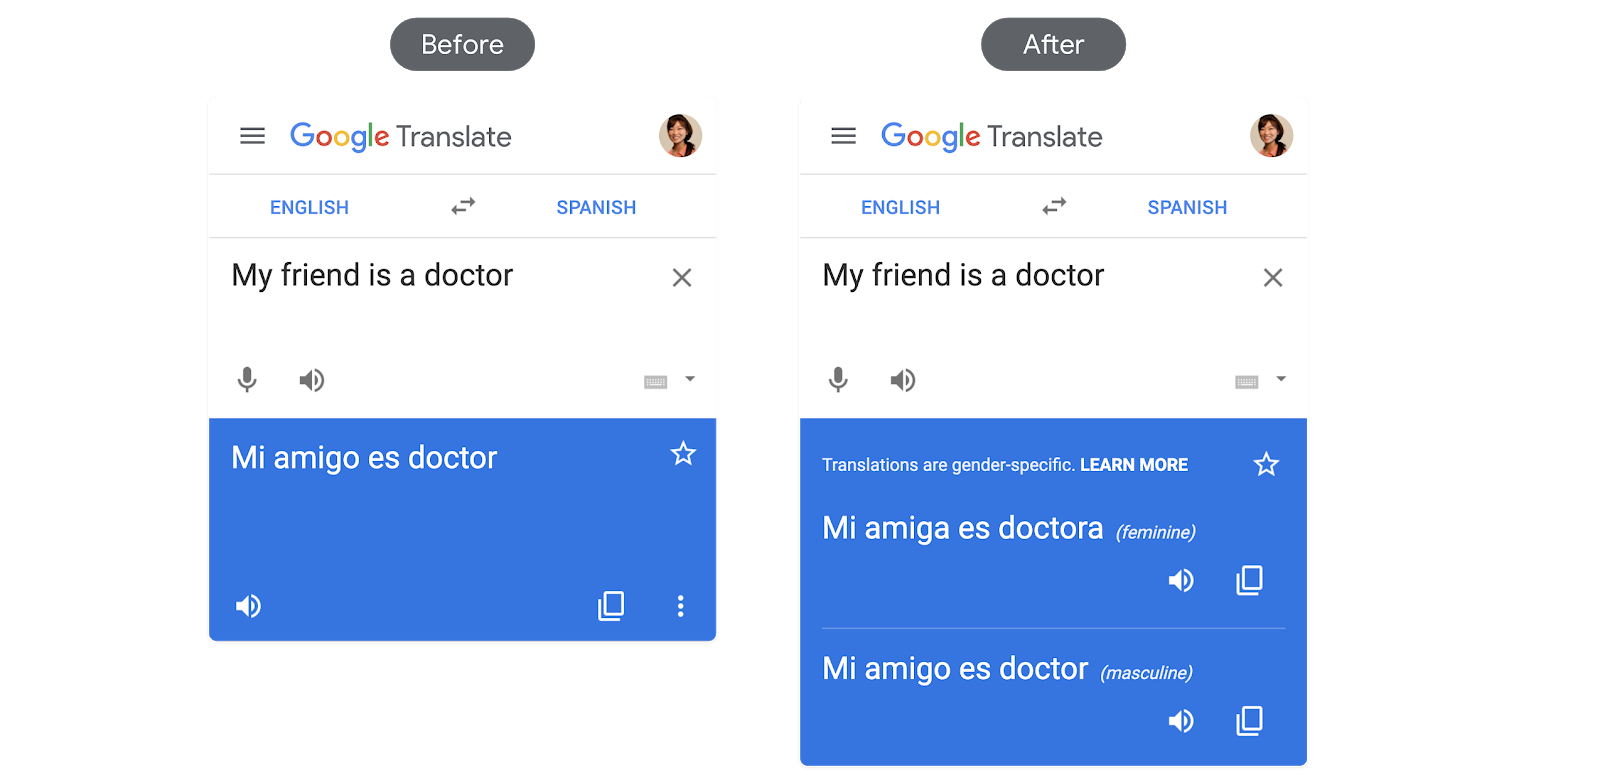 Google Translate App - Learn to Use a Camera to Translate Text